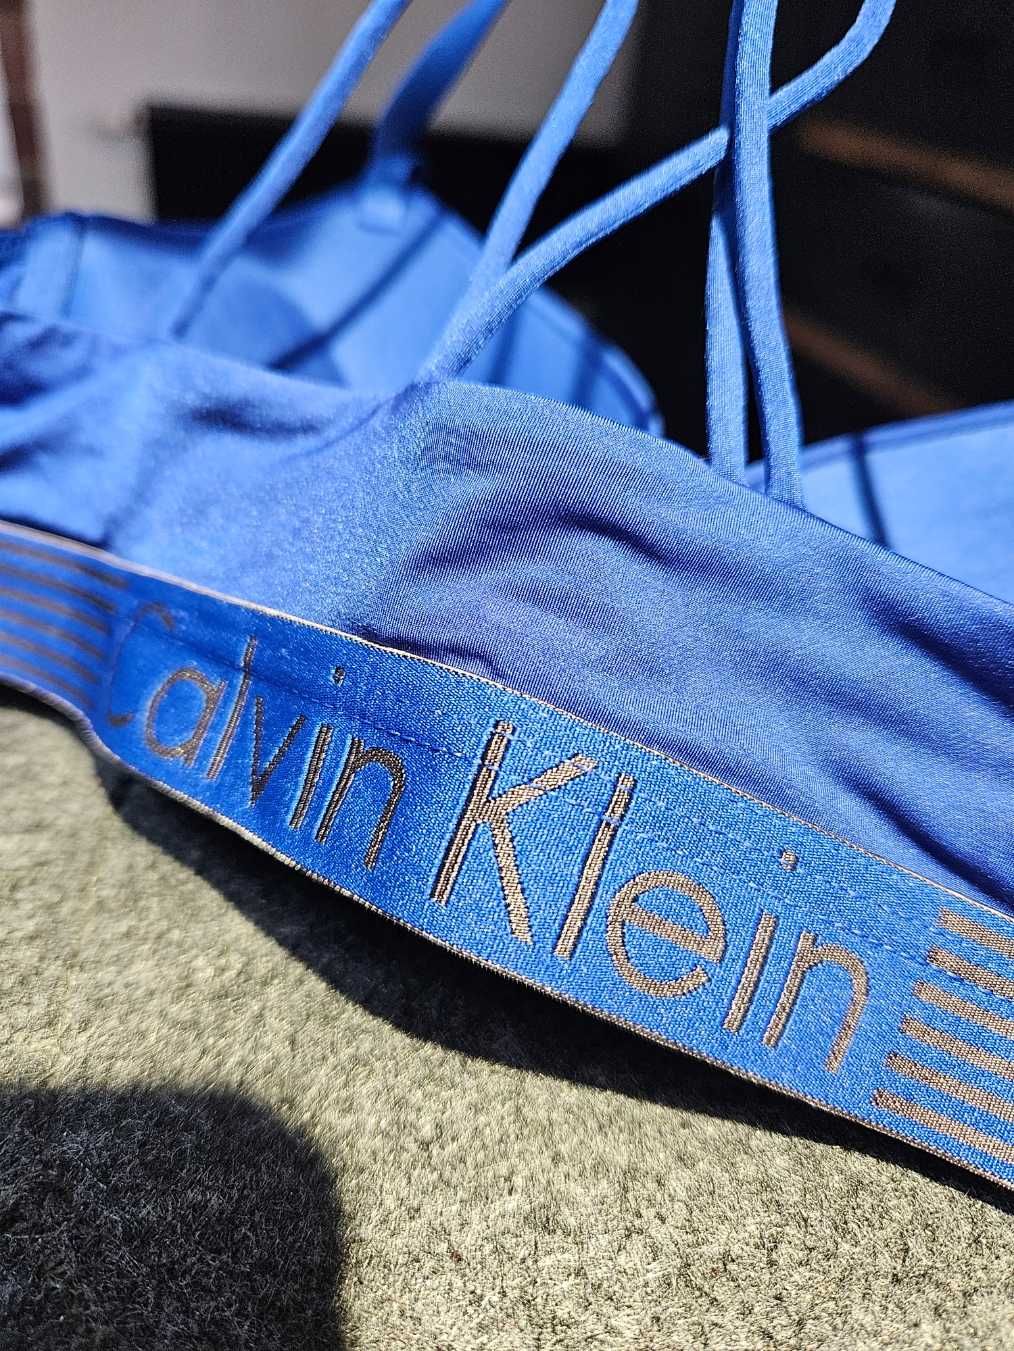 Biustonosz Calvin Klein 75B niebieski push up